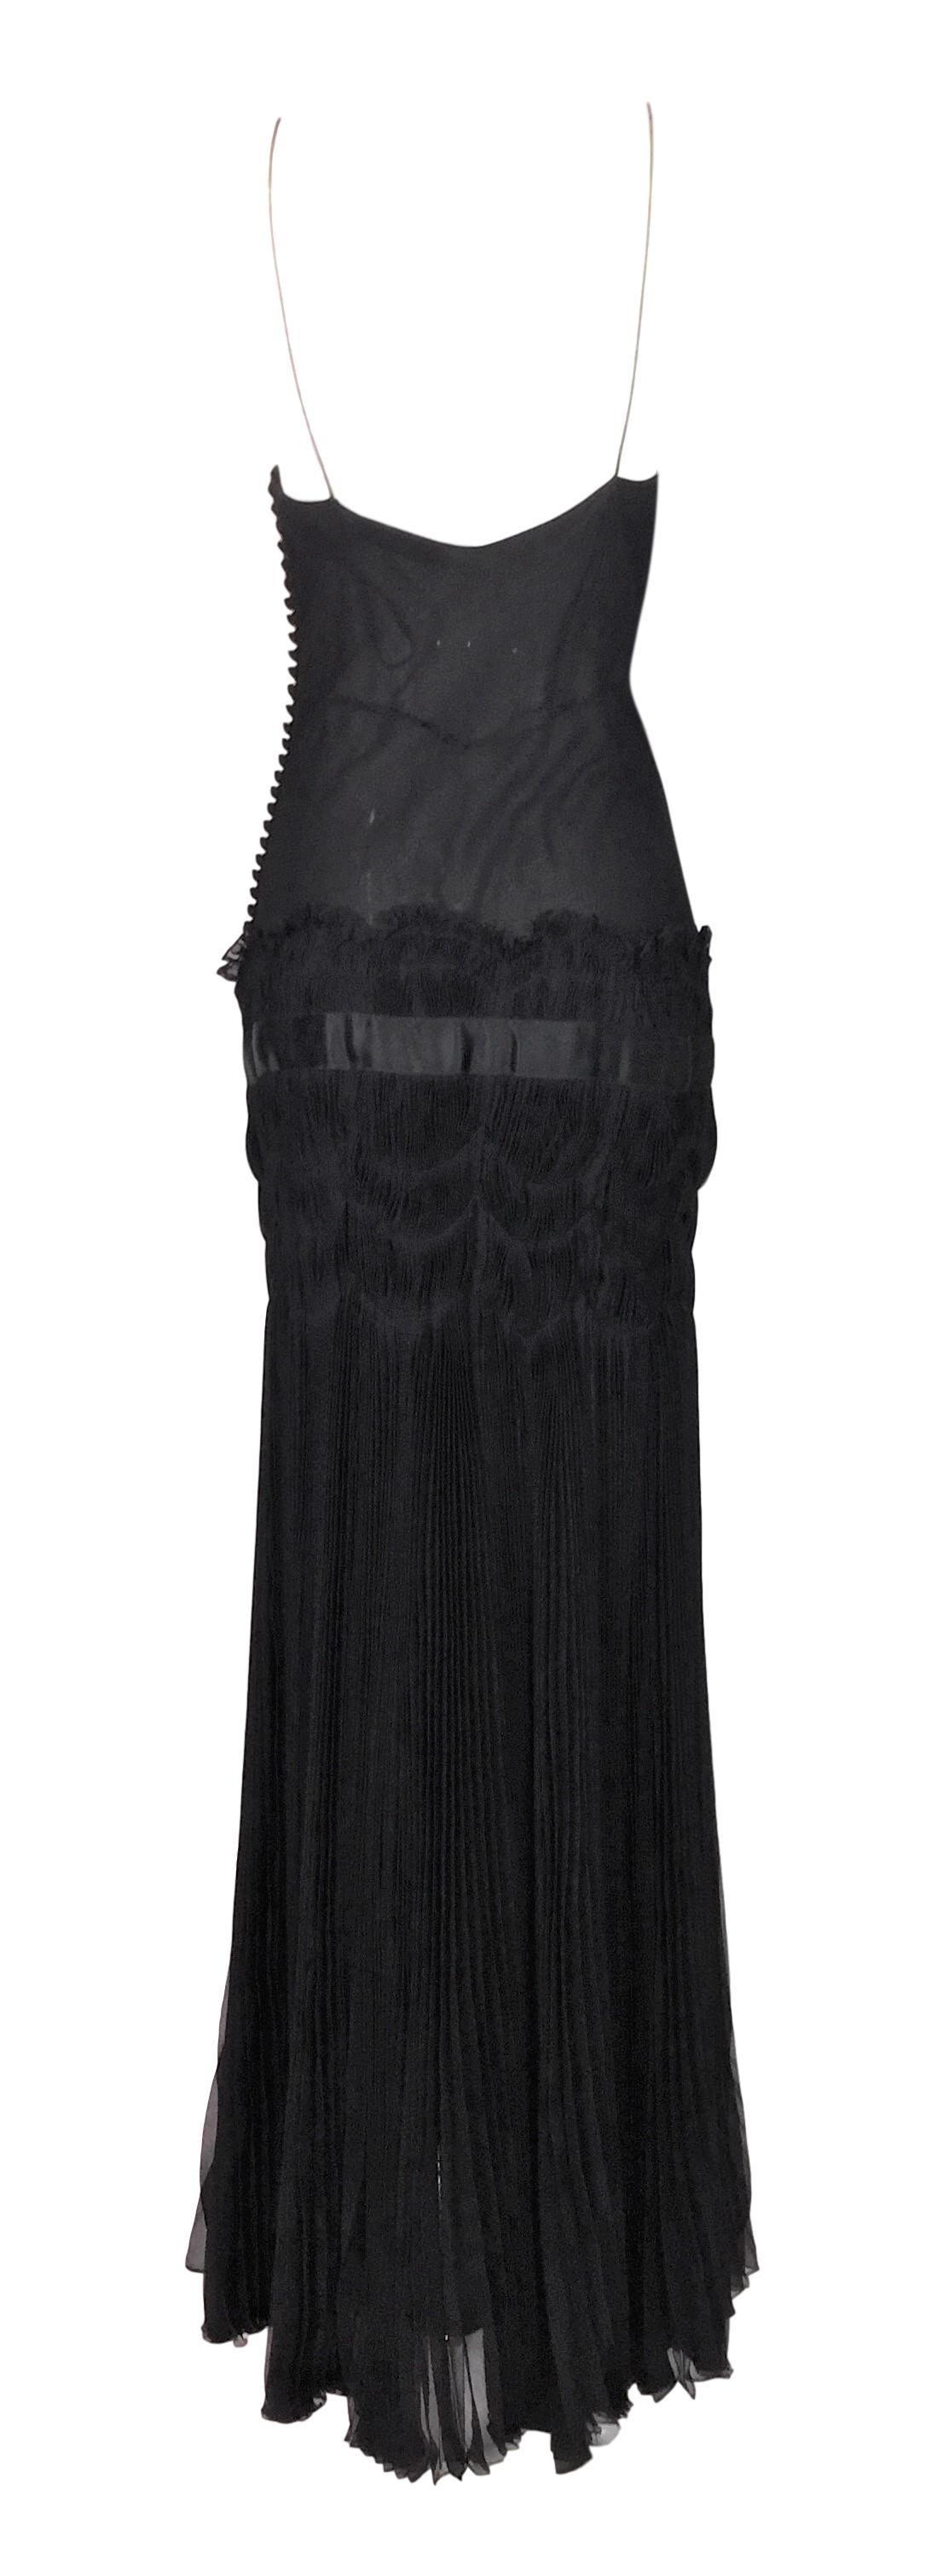 Women's S/S 2004 Christian Dior Unworn Sheer Black 20's Flapper Drop Waist Gown Dress